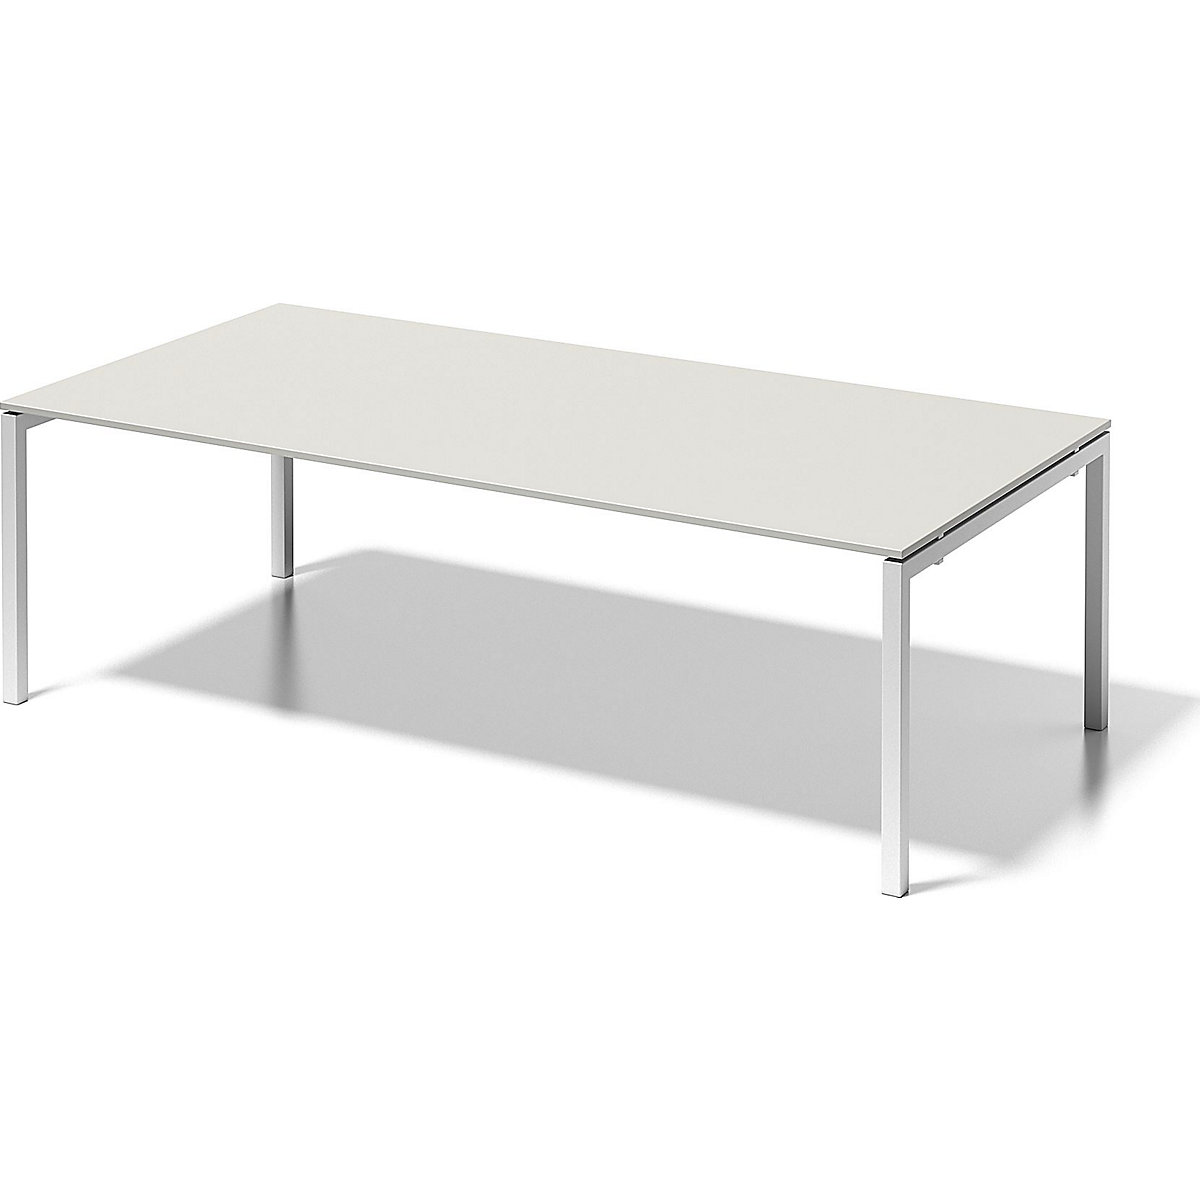 CITO desk, U-frame – BISLEY, HxWxD 740 x 2400 x 1200 mm, white frame, grey white tabletop-8